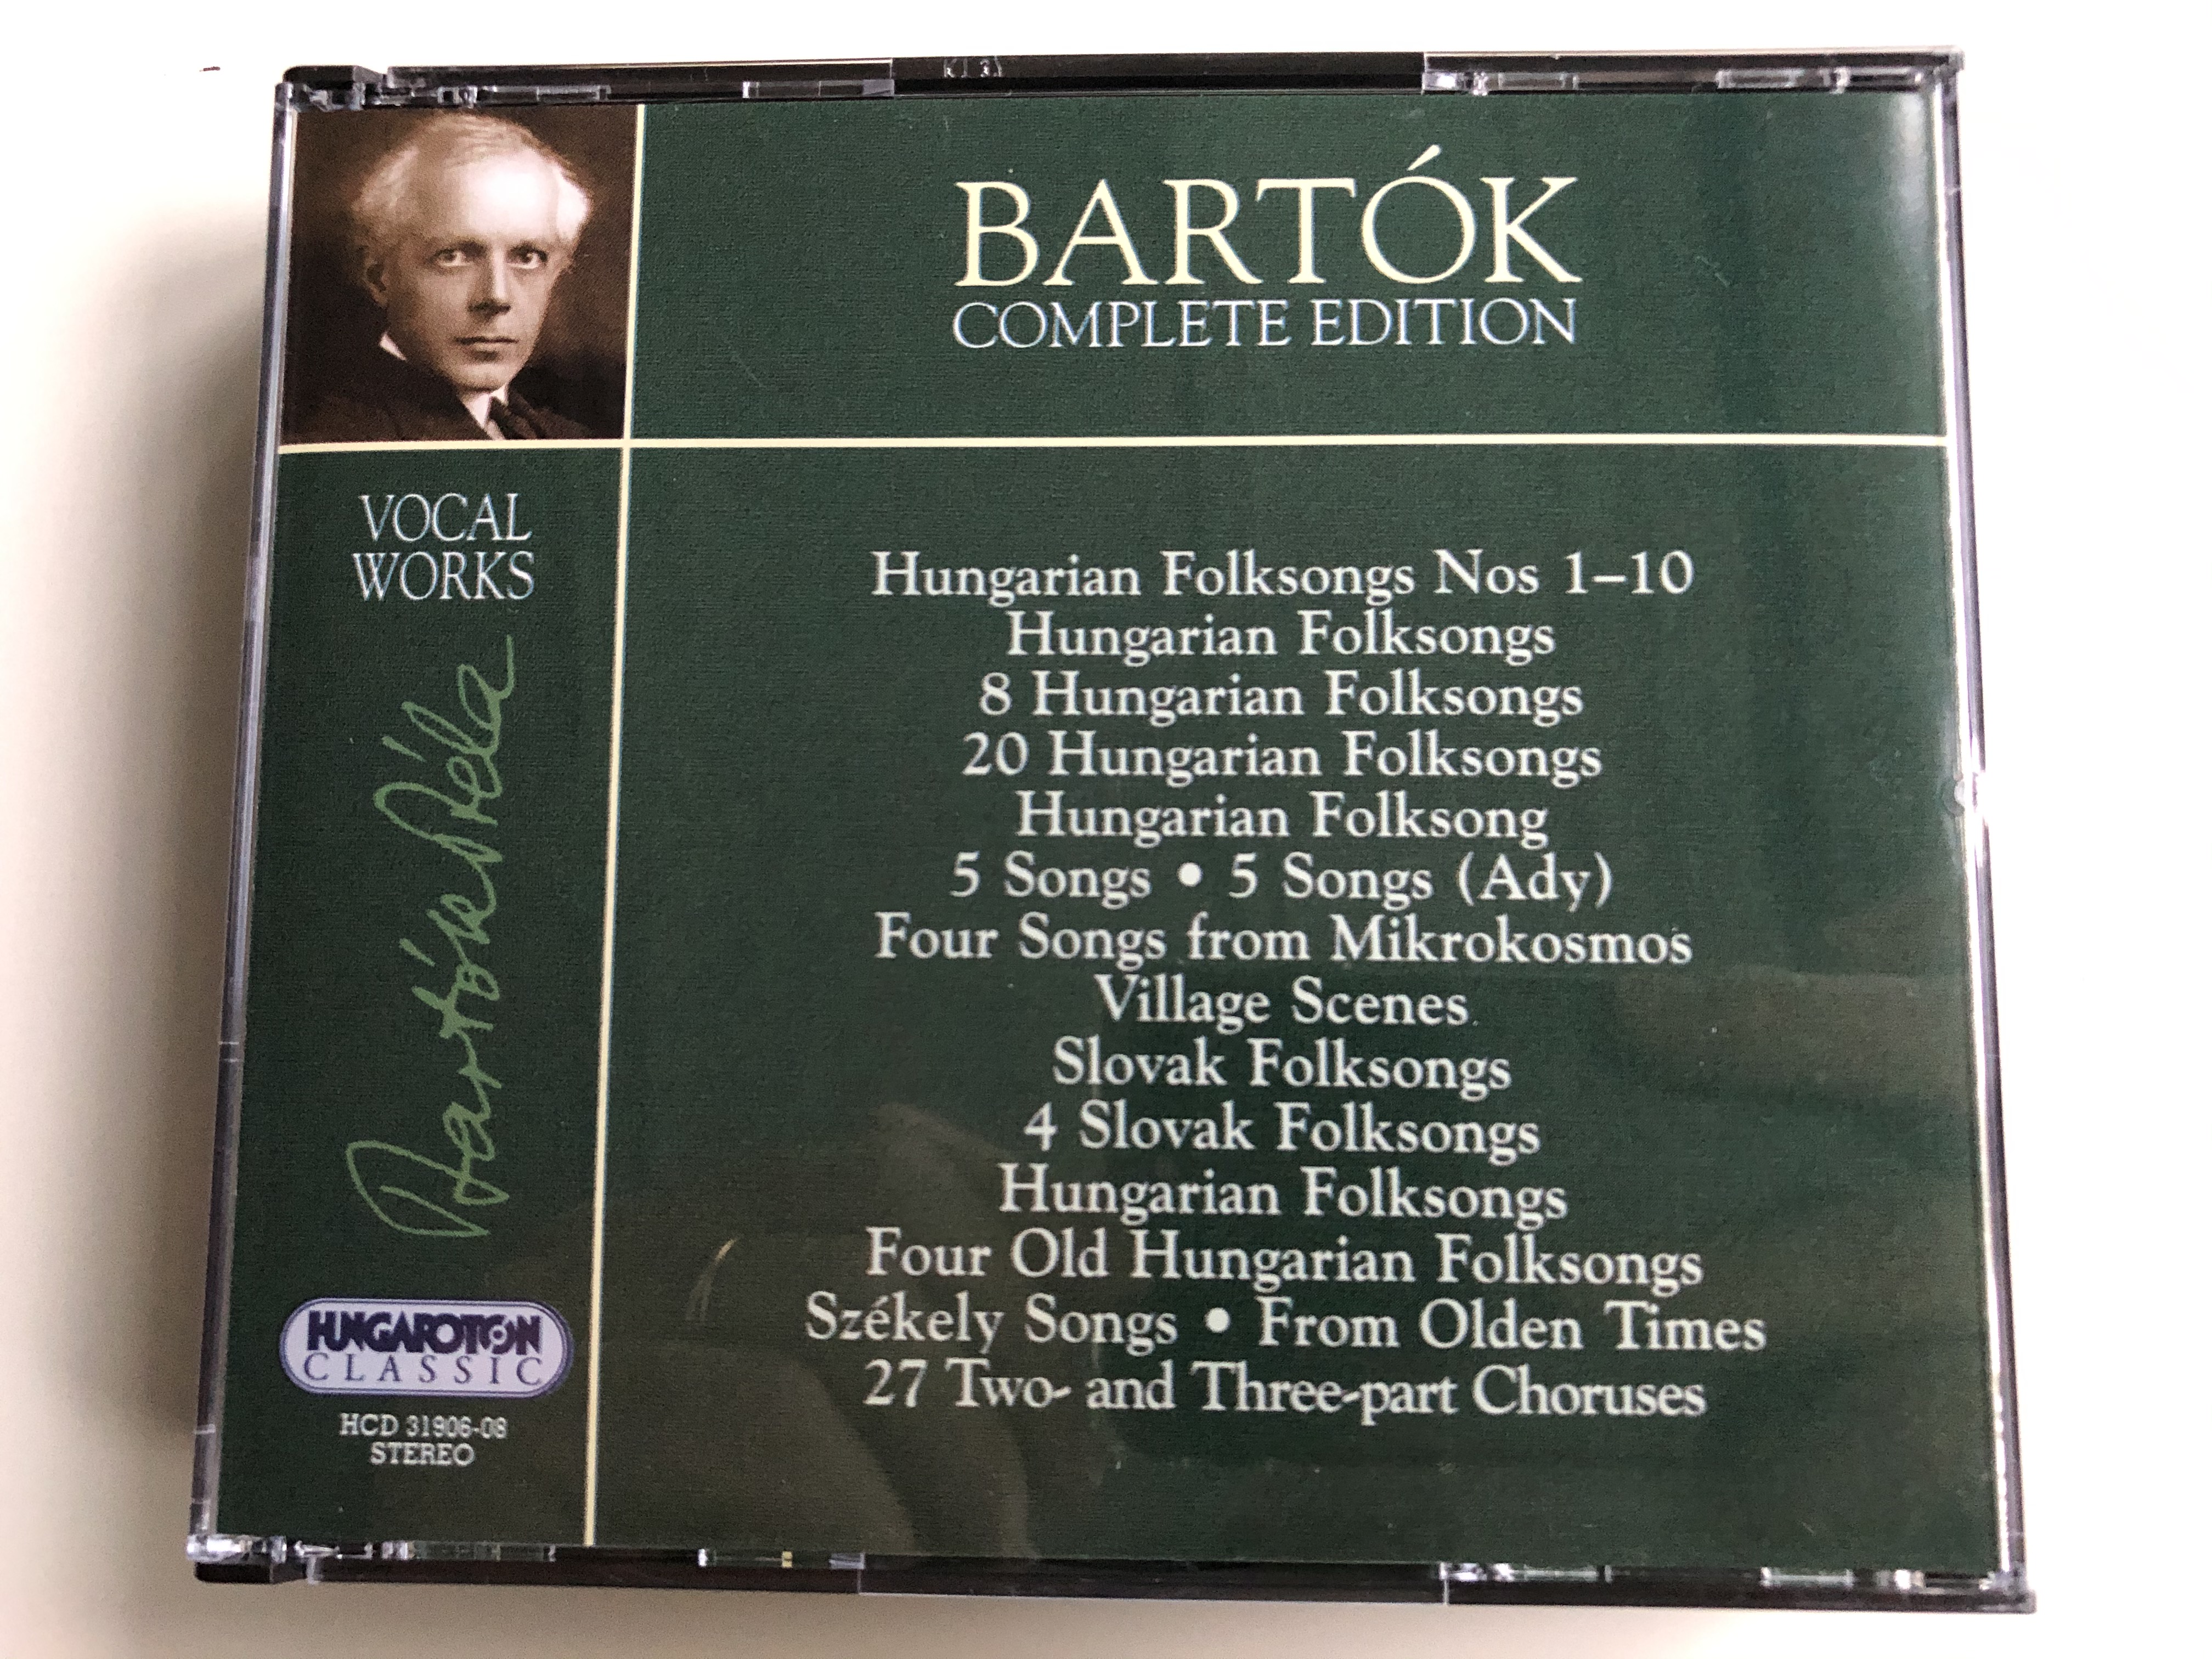 bartok-complete-edition-vocal-works-hungarian-folksongs-nos-1-10-hungarian-folksongs-8-hungarian-folksongs-20-hungarian-folksongs-hungarian-folksongs-5-songs-hungaroton-classic-3x-audio-cd-1-.jpg